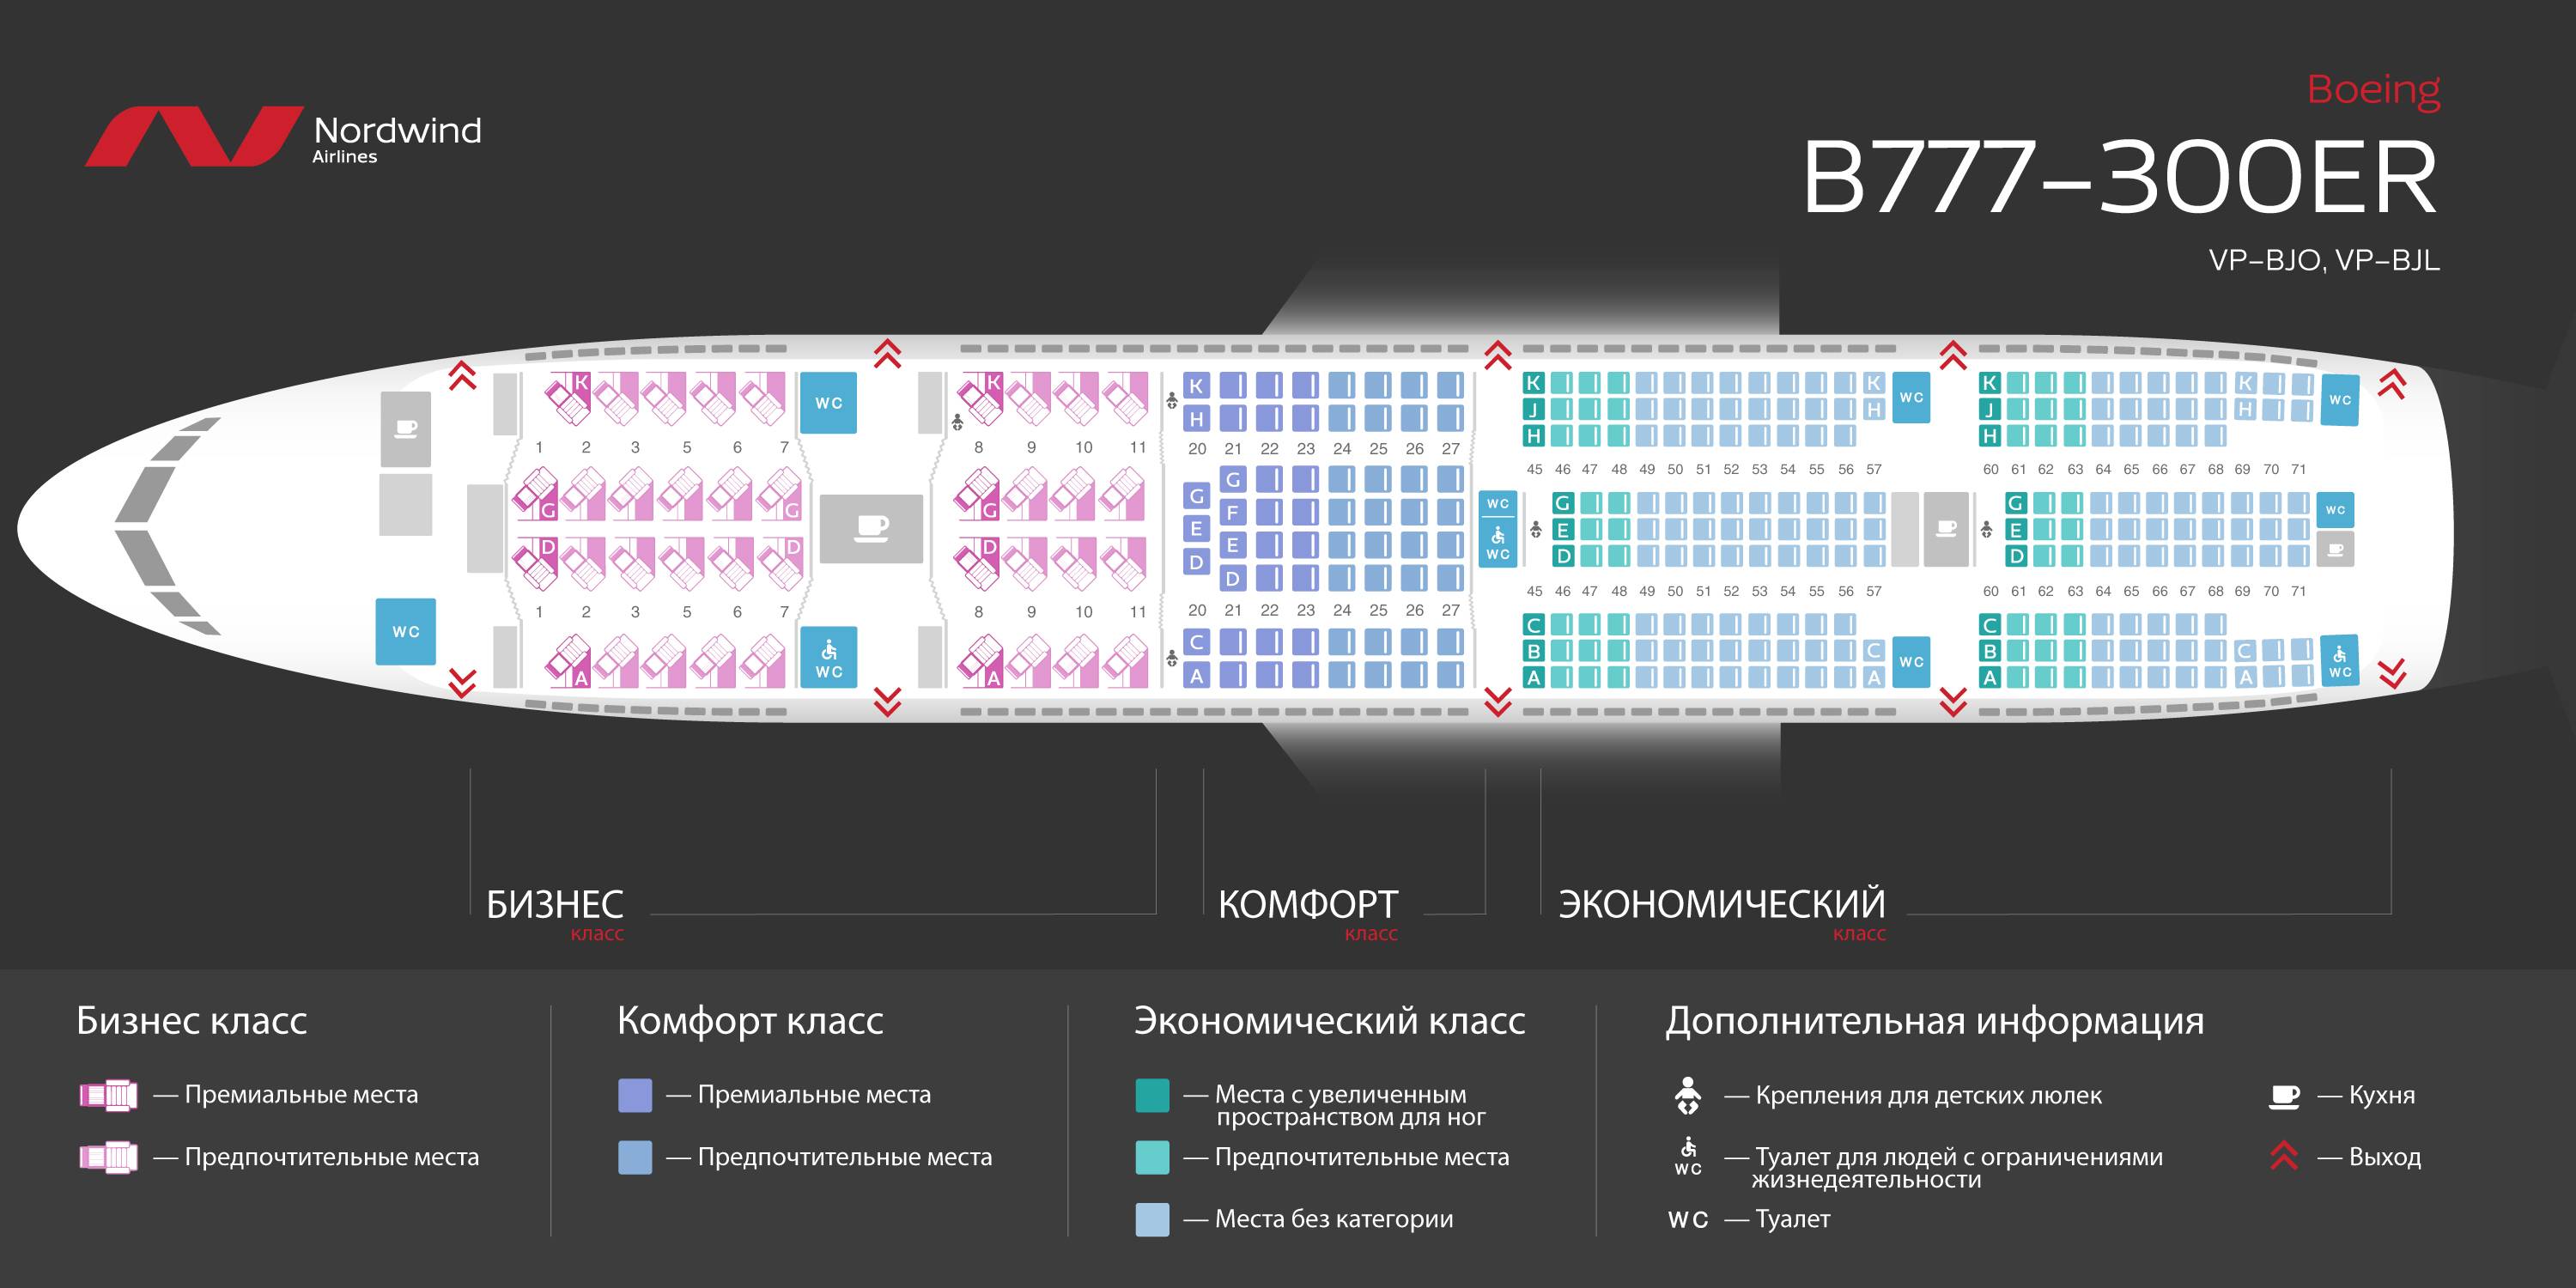 ✅ боинг 777: boeing 300er и 200 - отличия, самолёты авиакомпании норд винд (северный ветер), салон - количество мест - ligastrelkov.ru